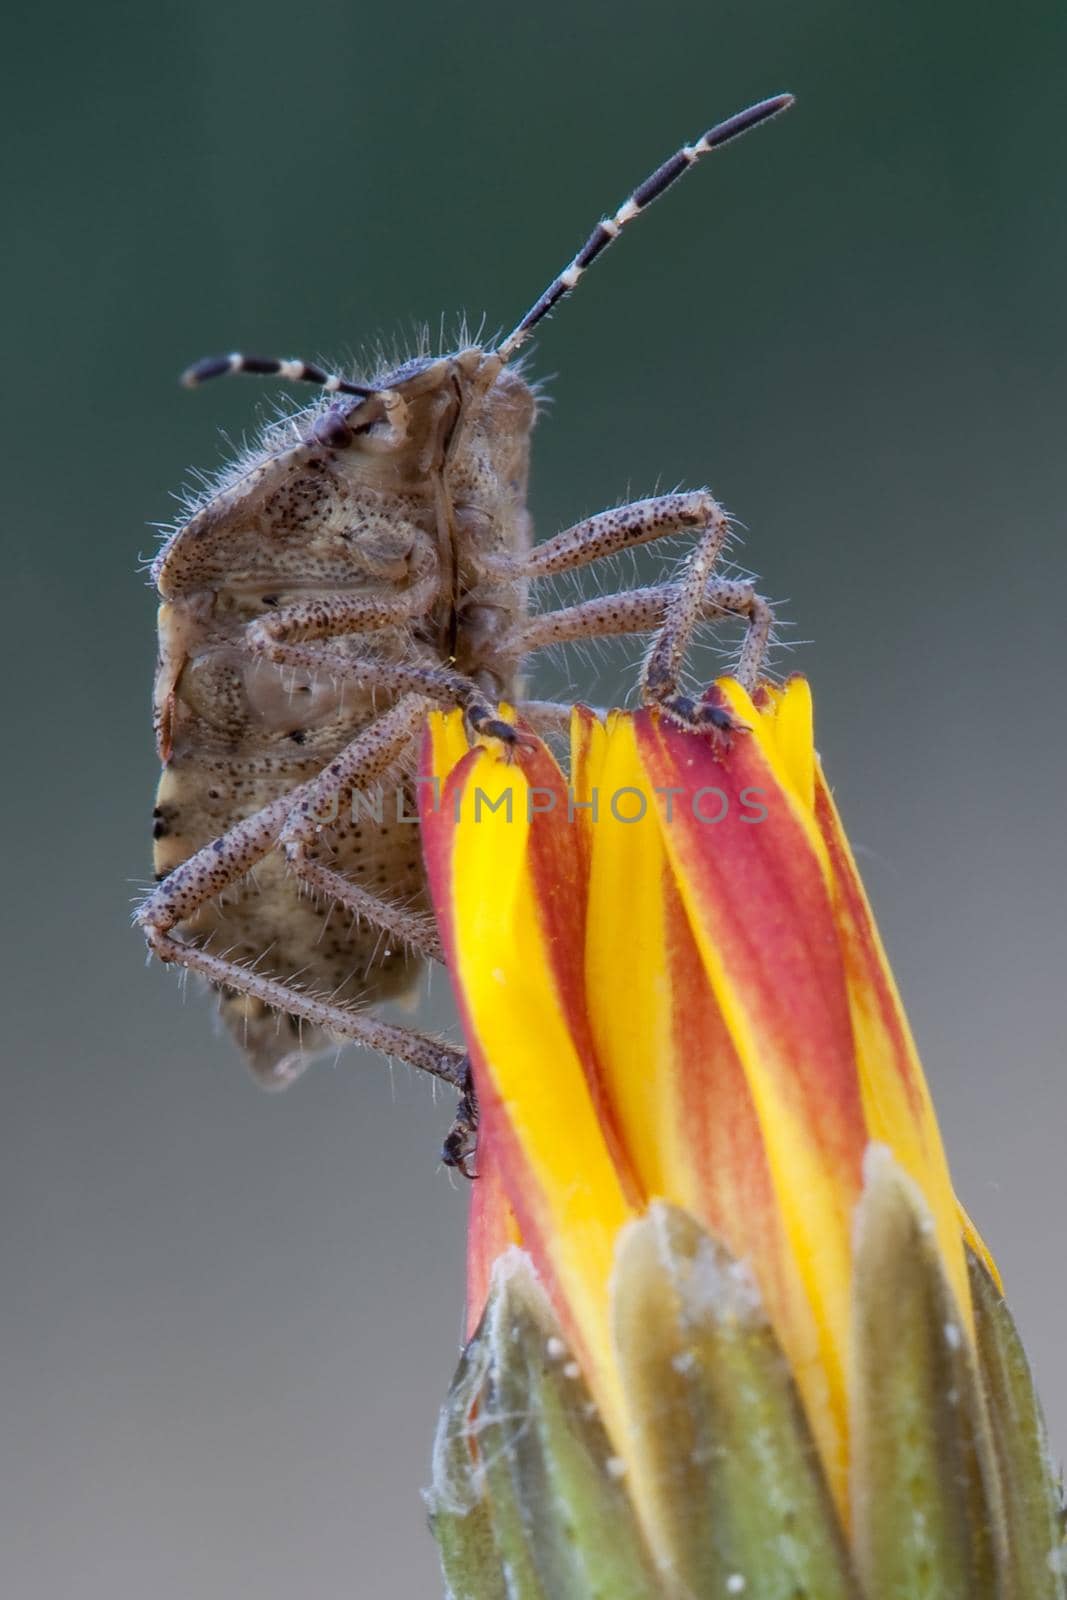 Shield Bug closeup portrait on the flower bud by Lincikas